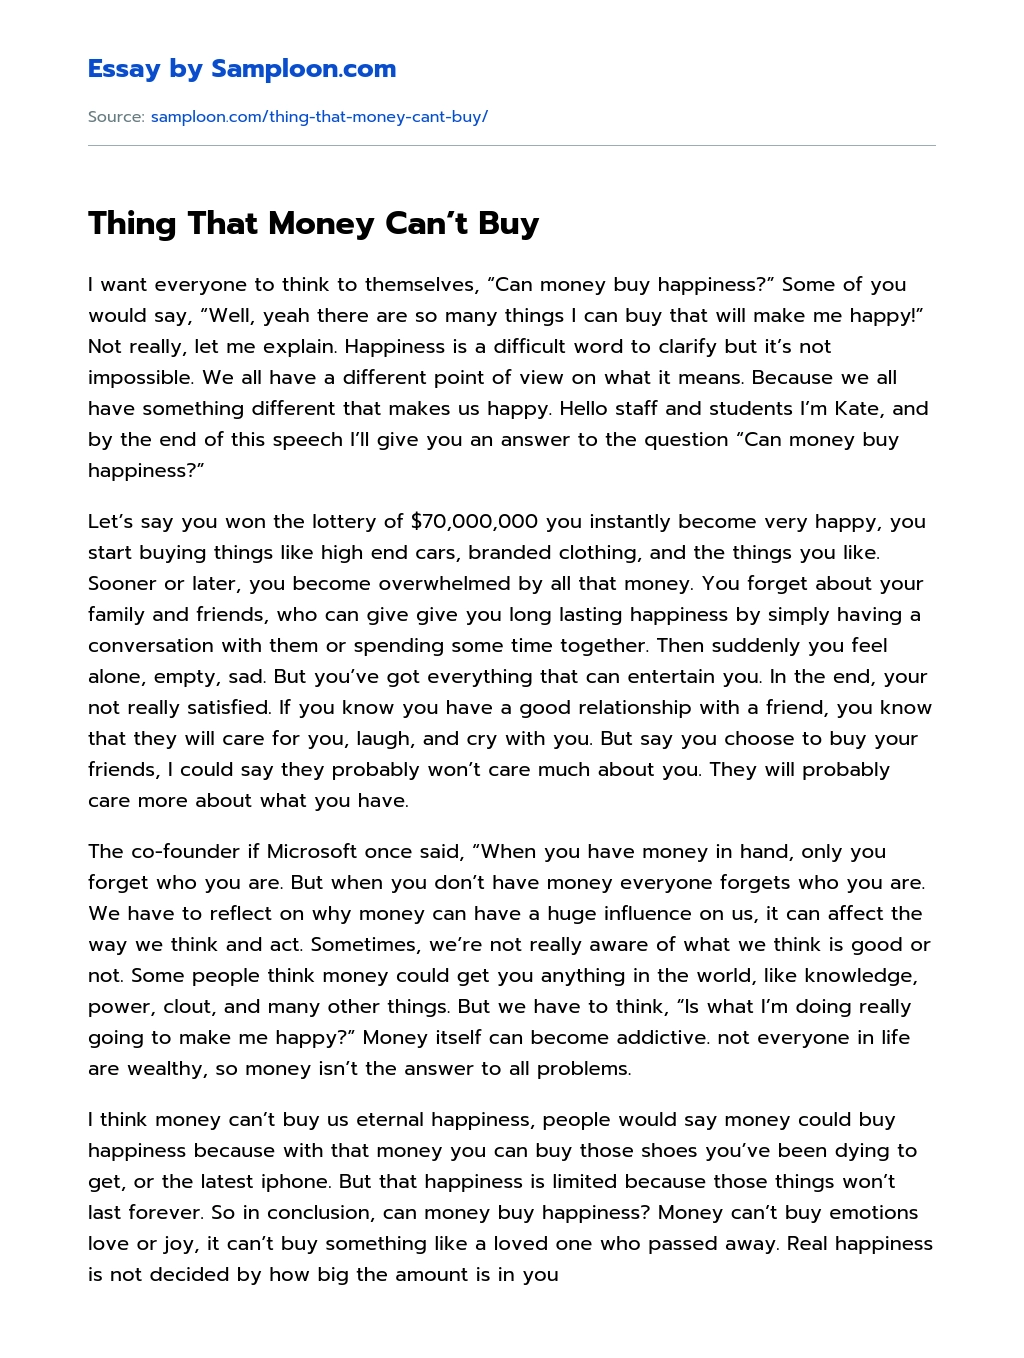 money can't buy essay